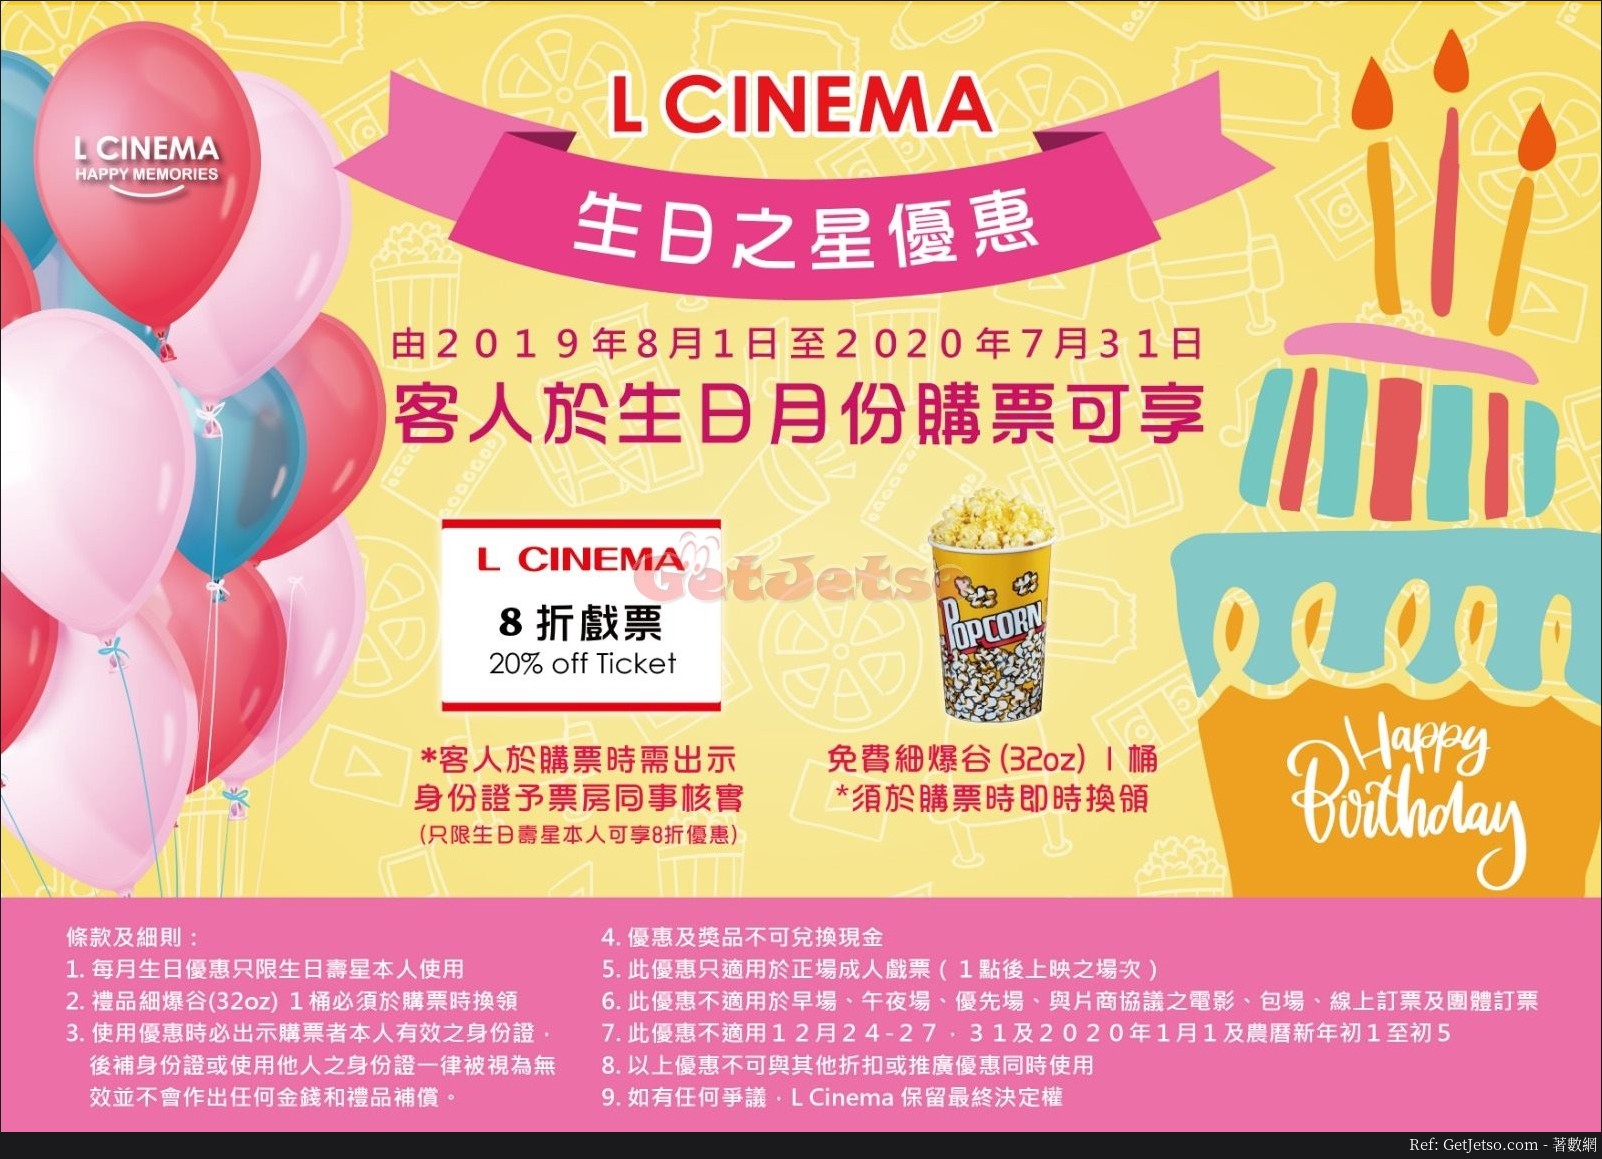 L CINEMA 每月生日之星睇戲8折優惠(至20年7月31日)圖片1